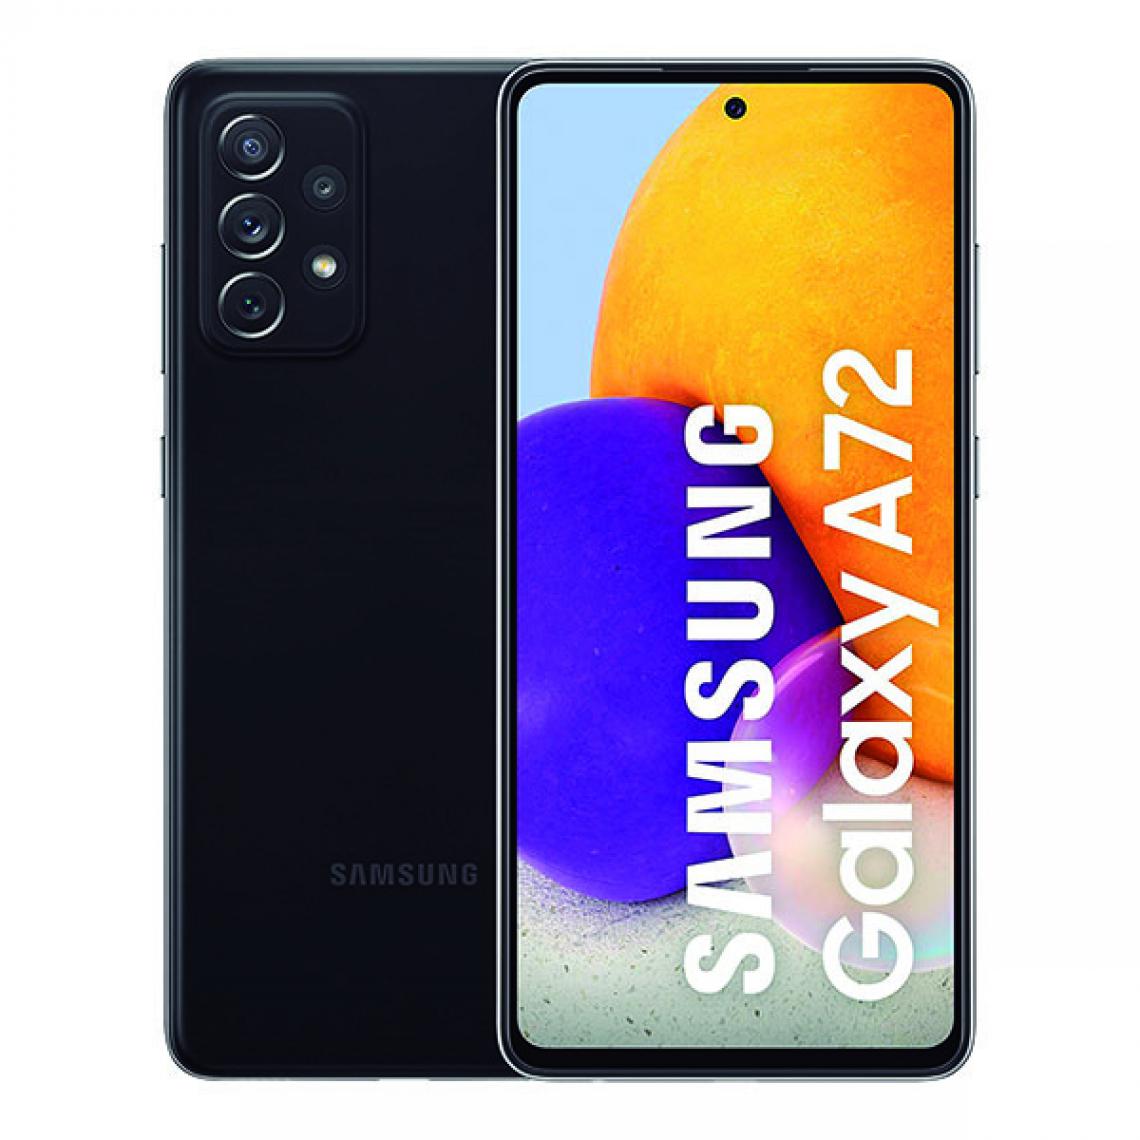 Samsung - Samsung Galaxy A72 6Go/128Go Noir (Awesome Black) Dual SIM - Smartphone Android